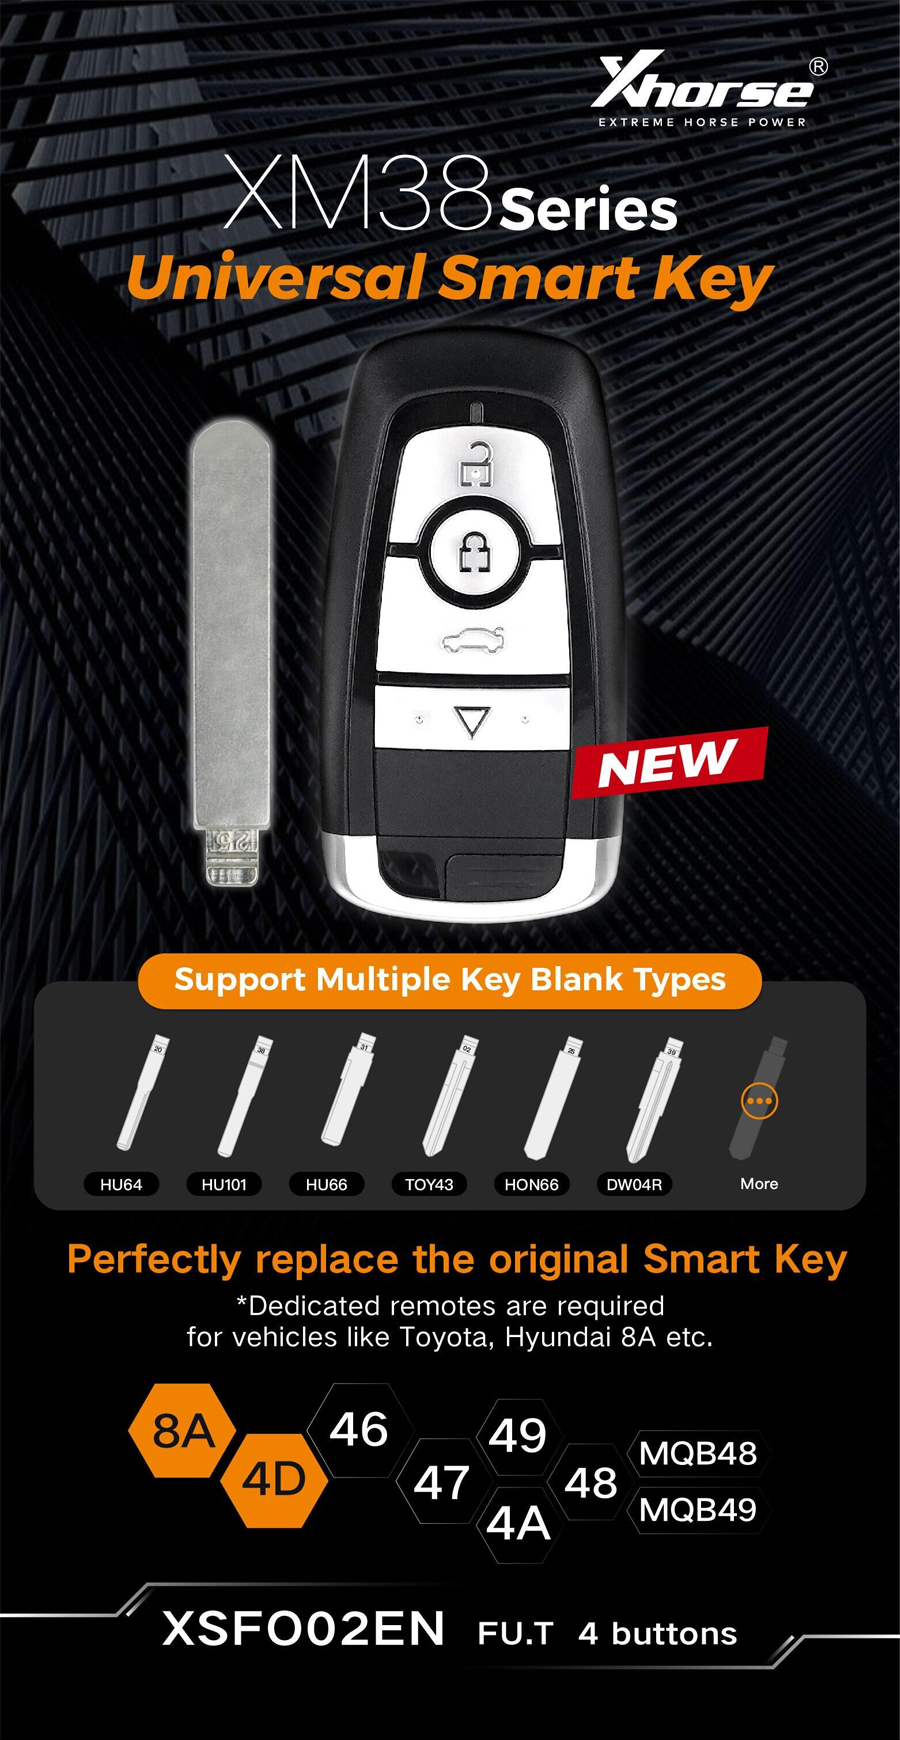 xm38 smart key